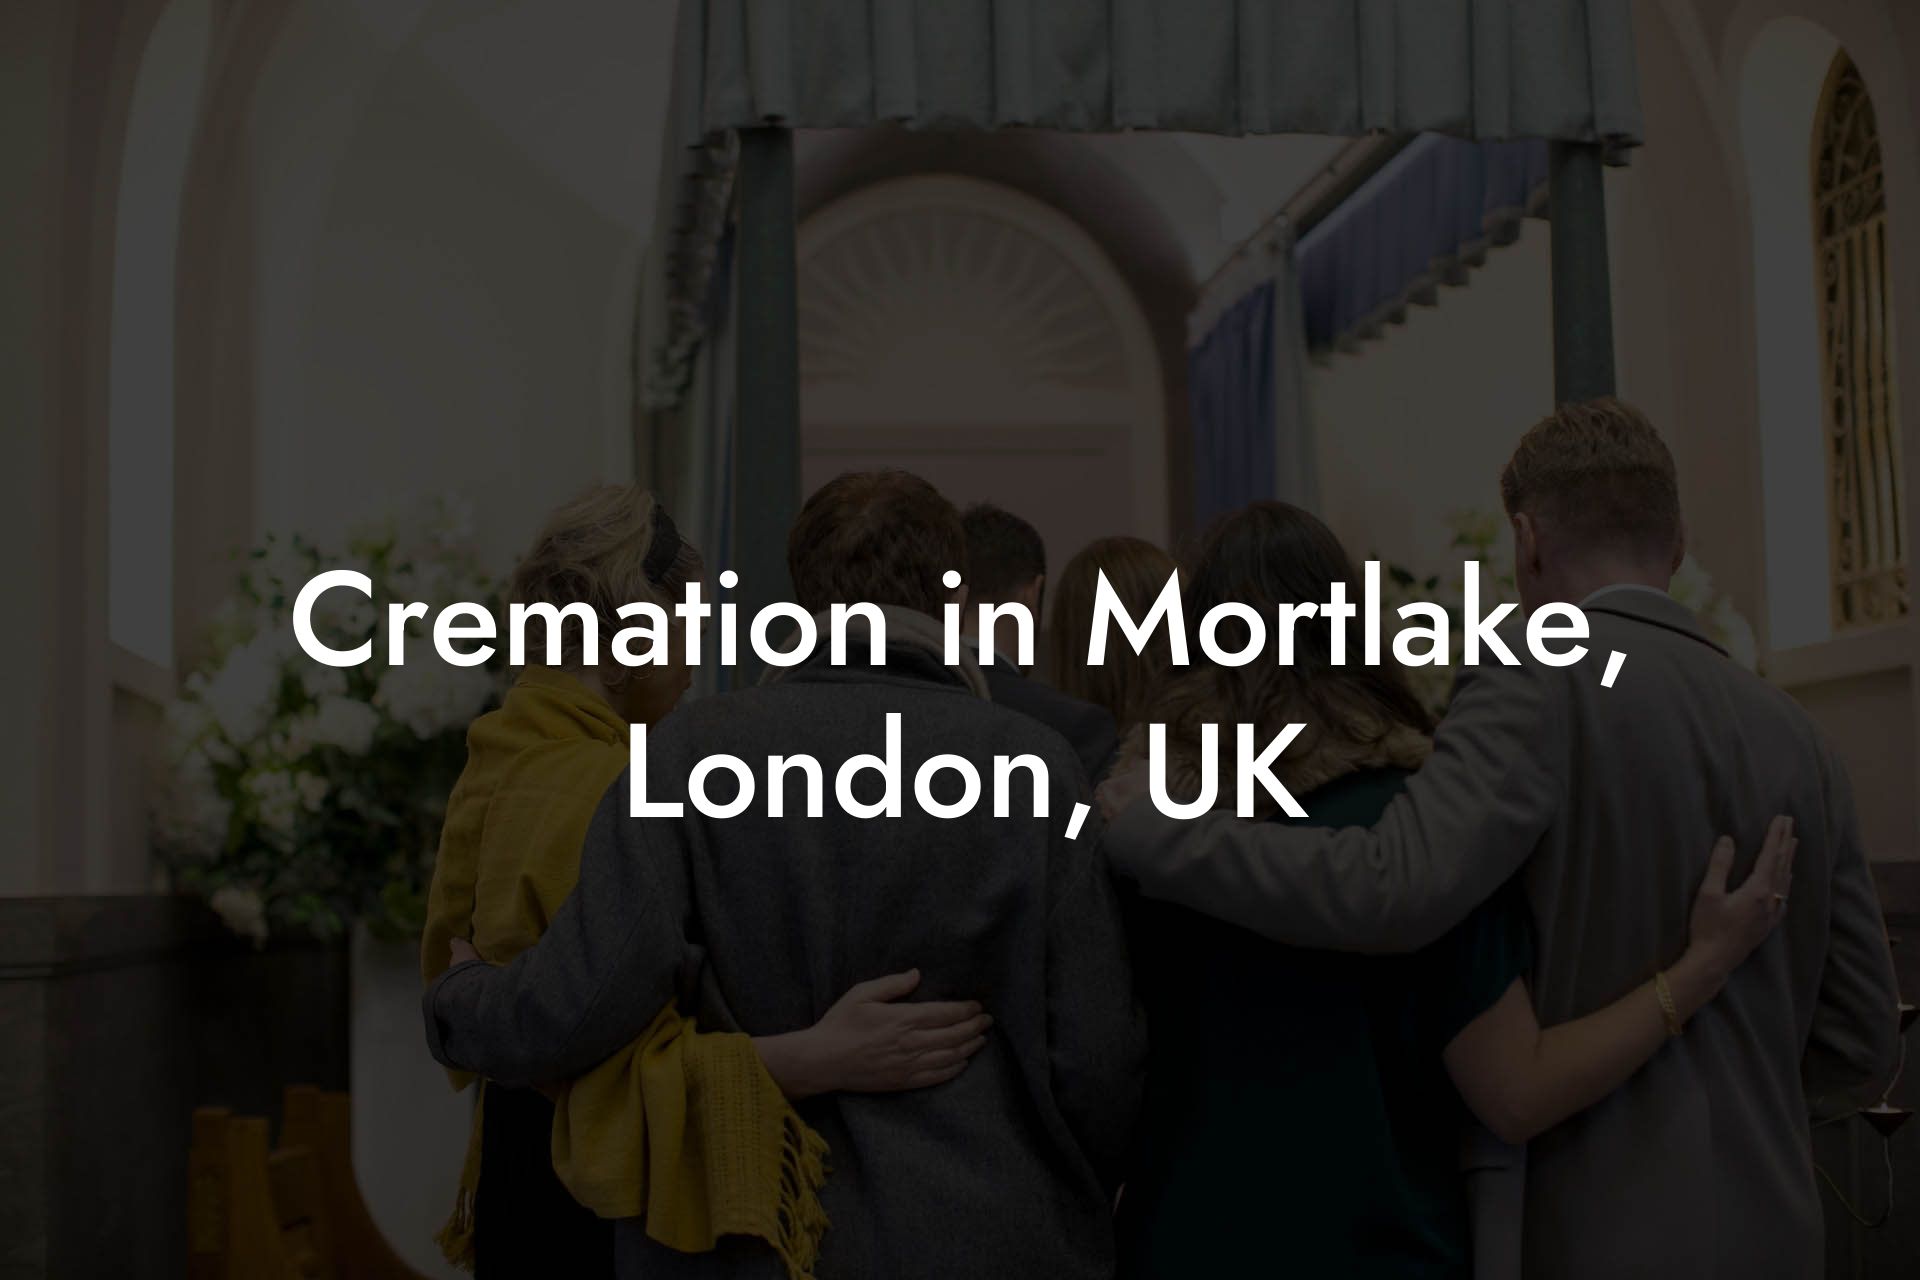 Cremation in Mortlake, London, UK